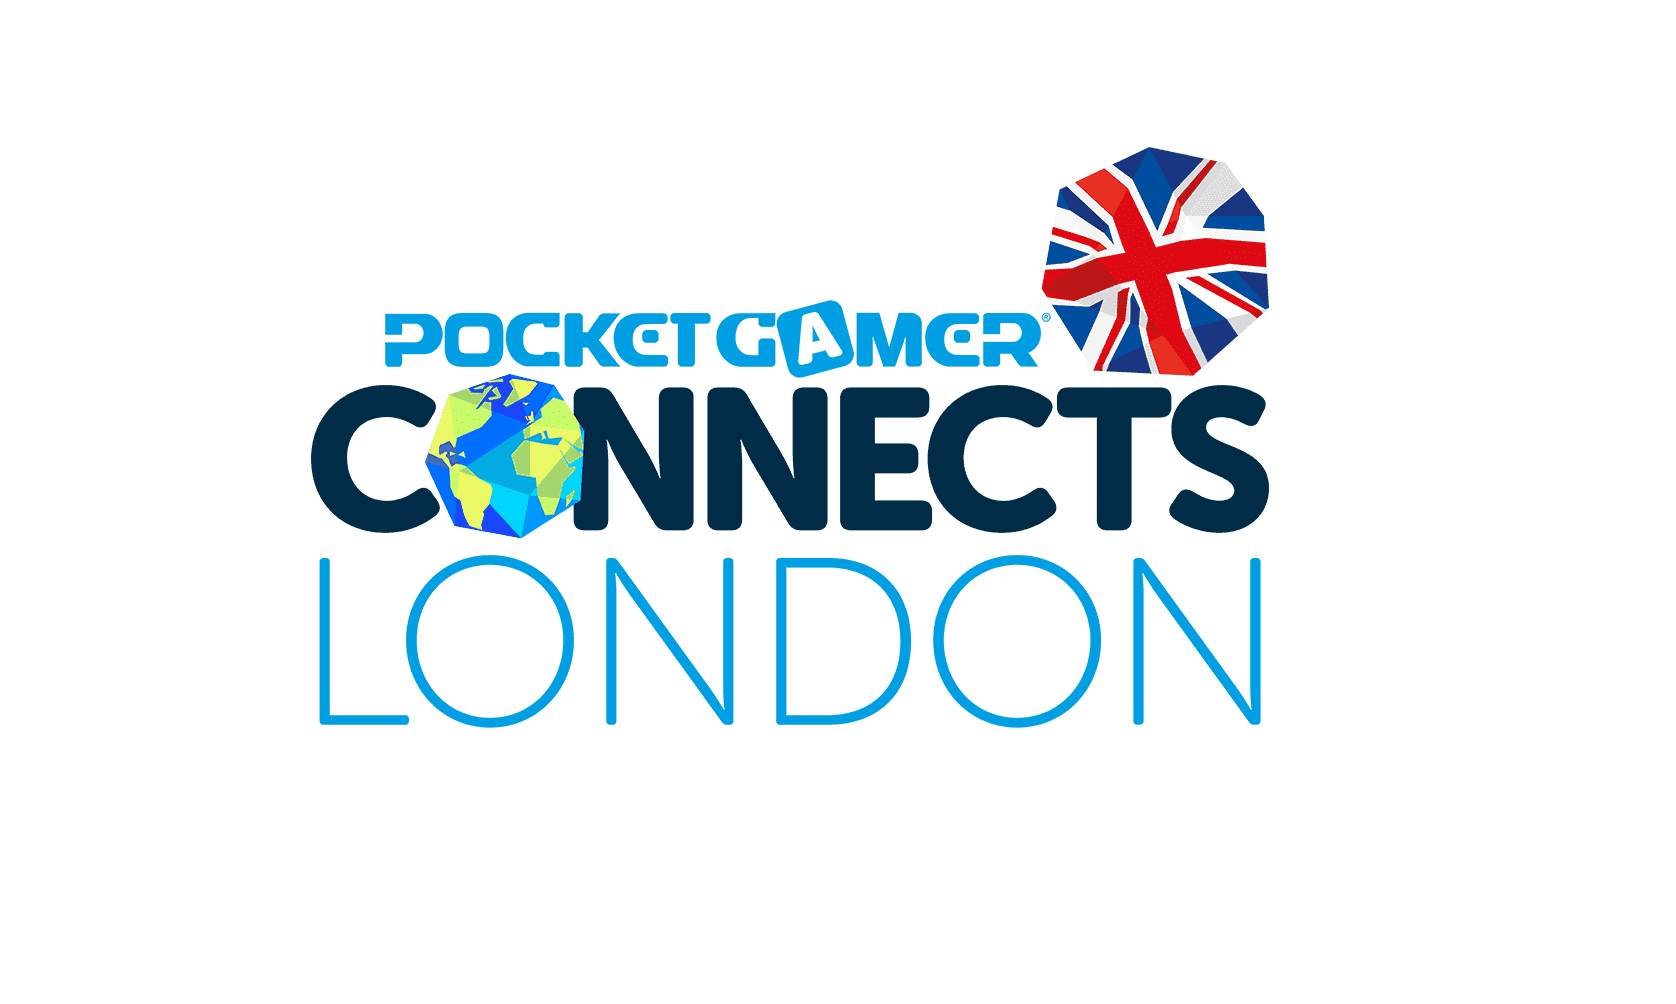 Pocket Gamer Event in London